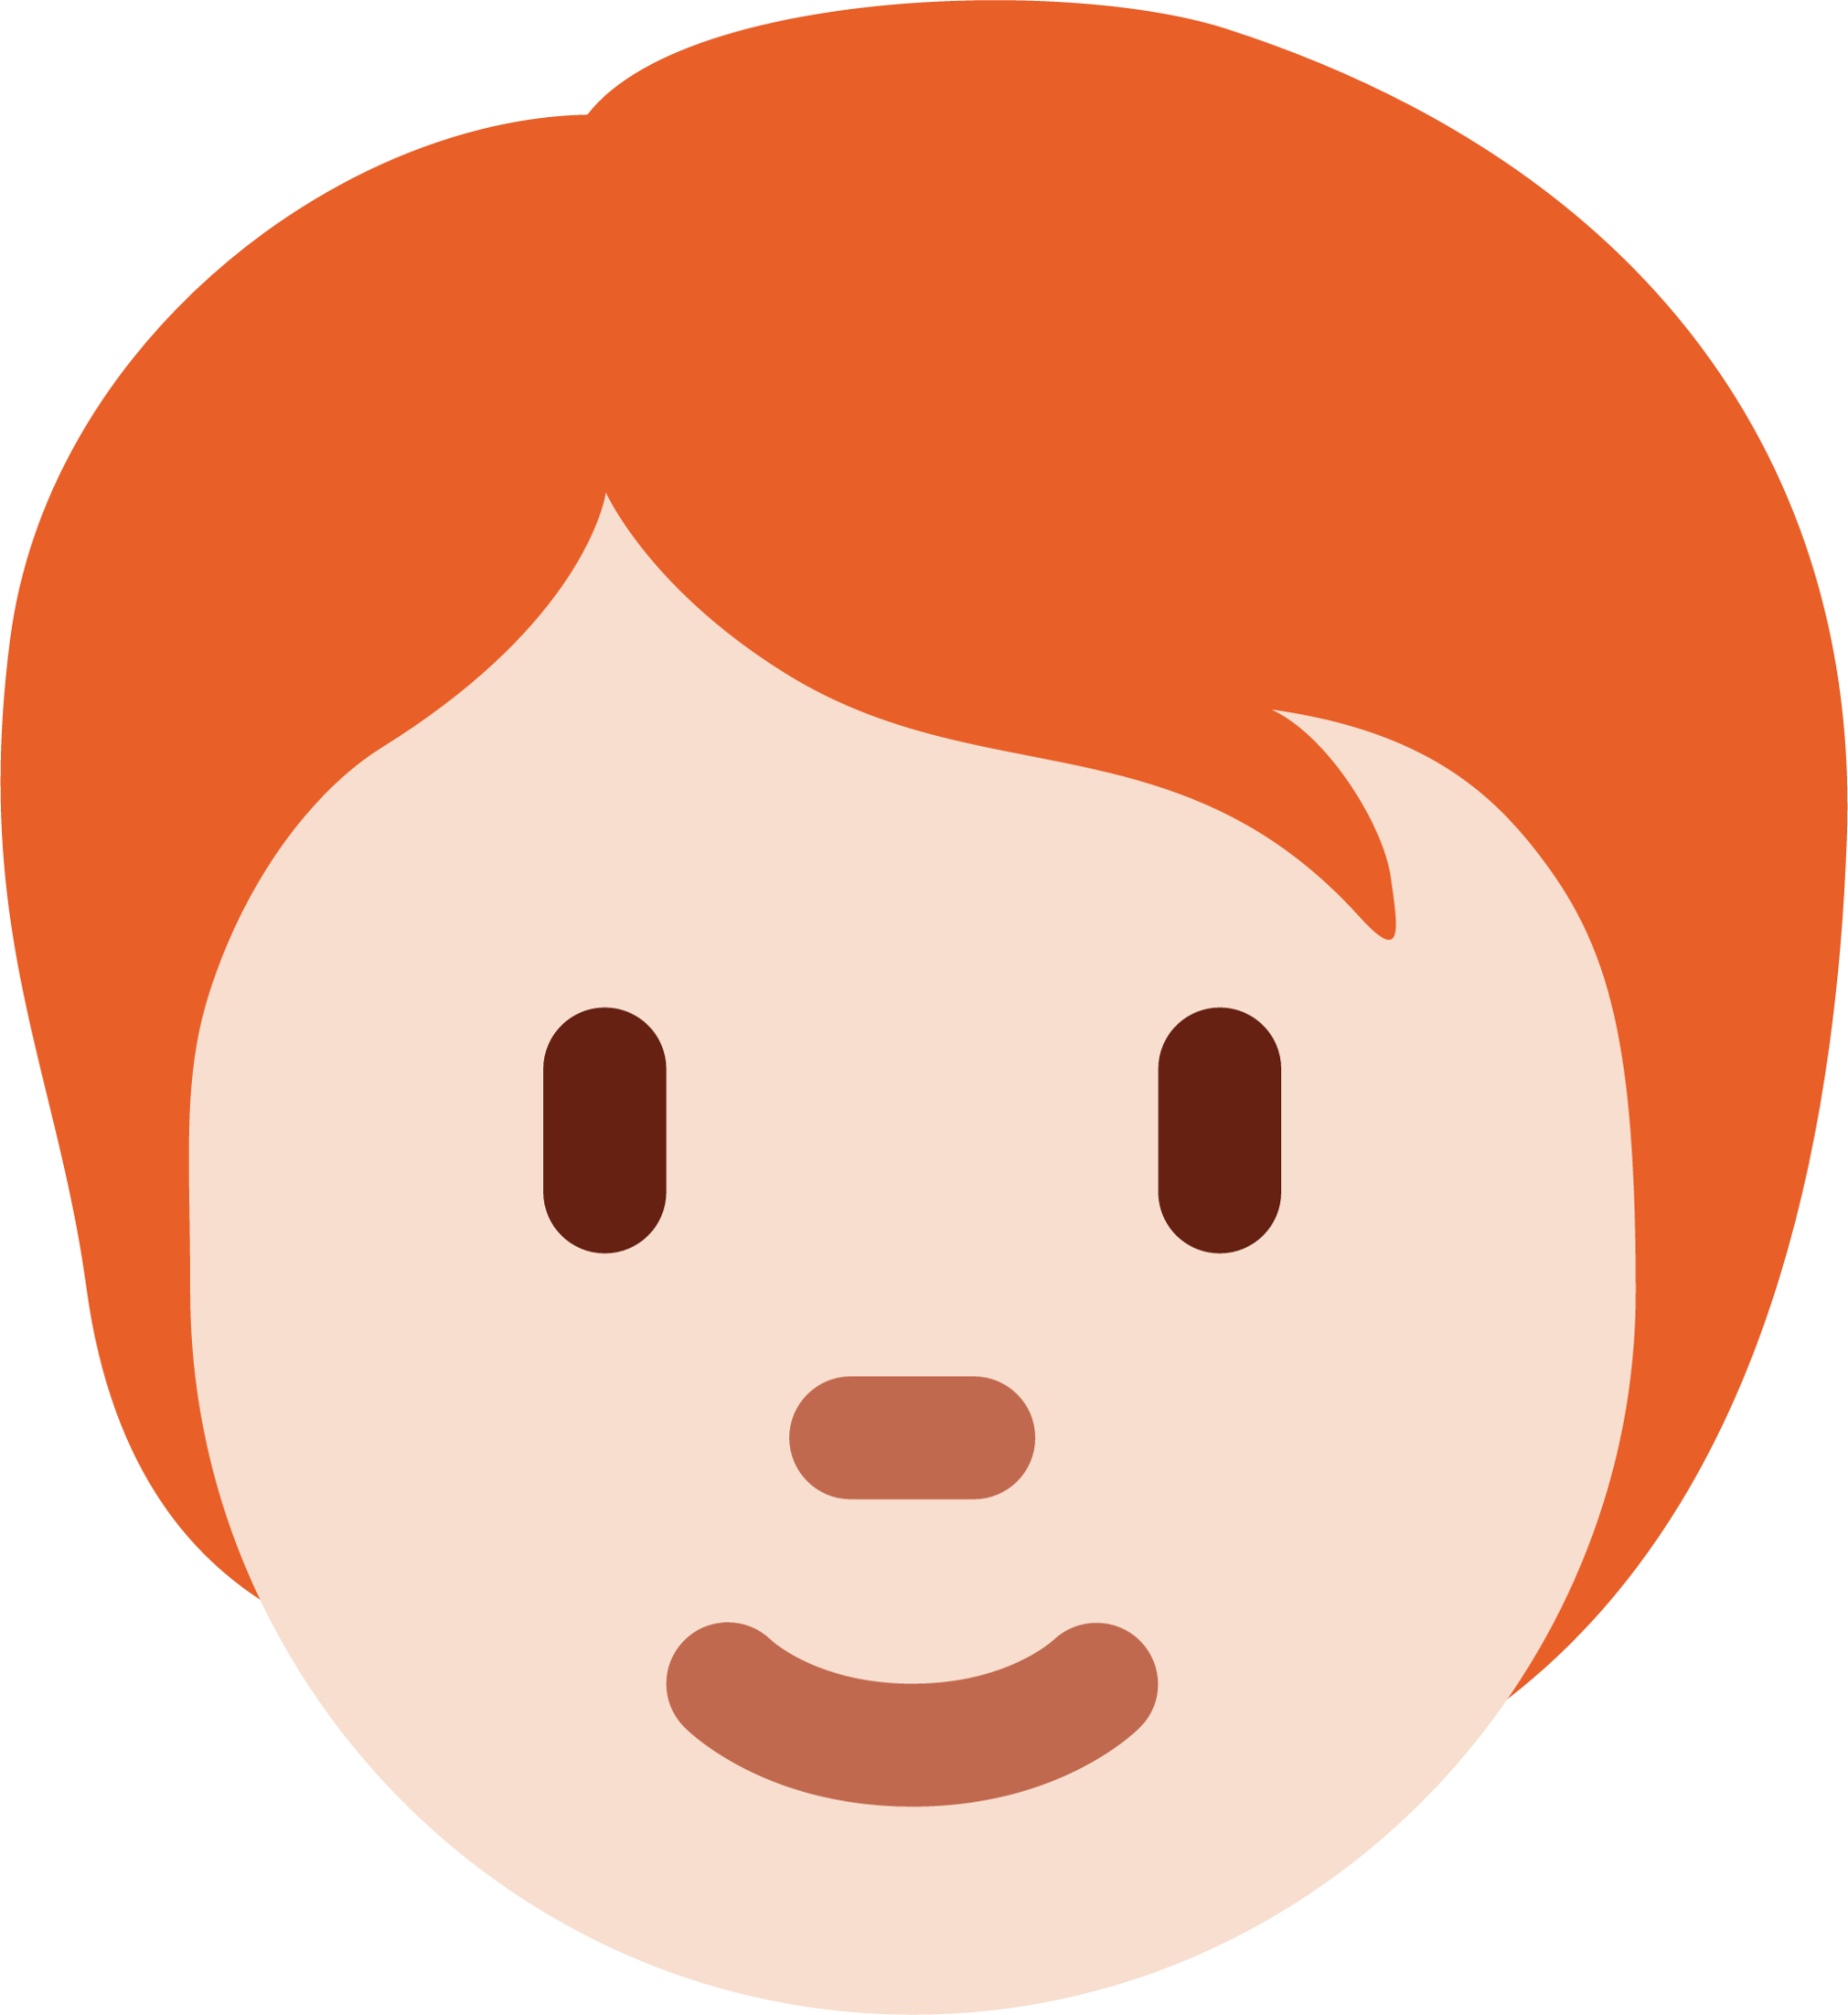 person: light skin tone, red hair emoji